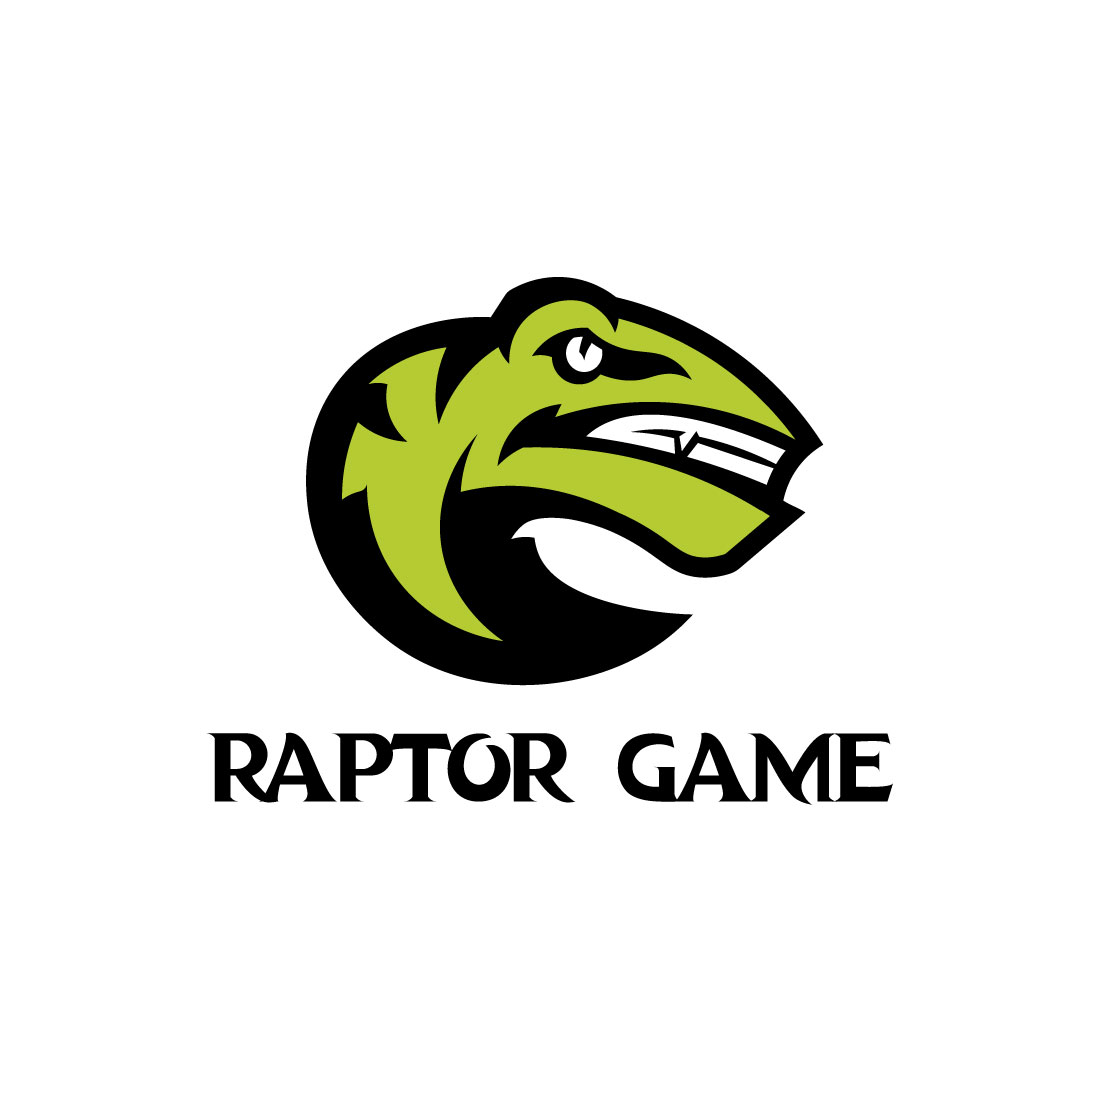 Raptor game Logo preview image.